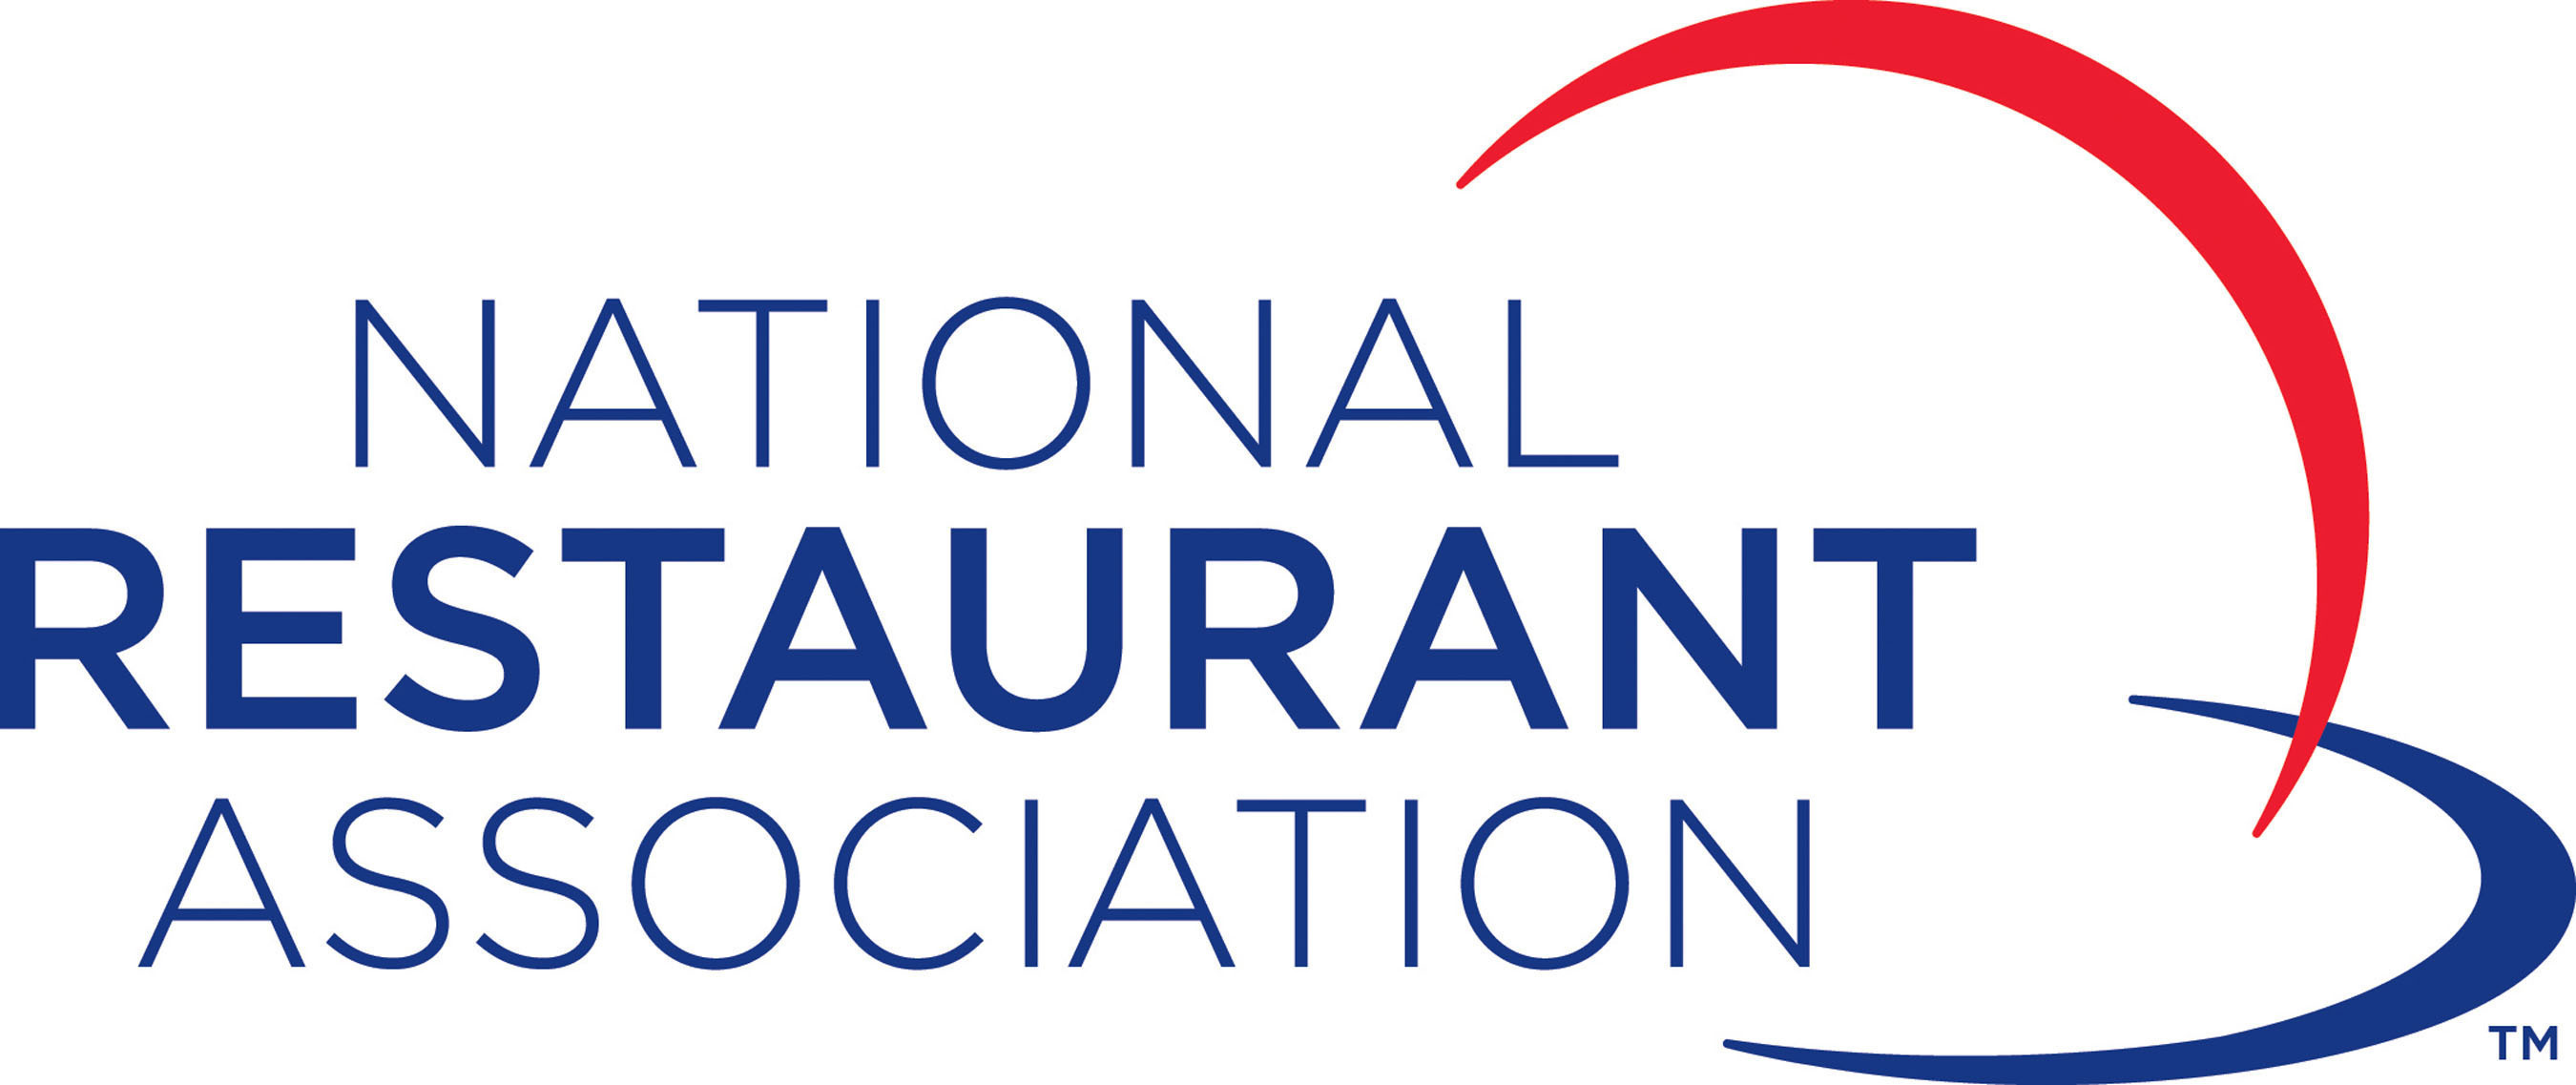 National Restaurant Association Logo.